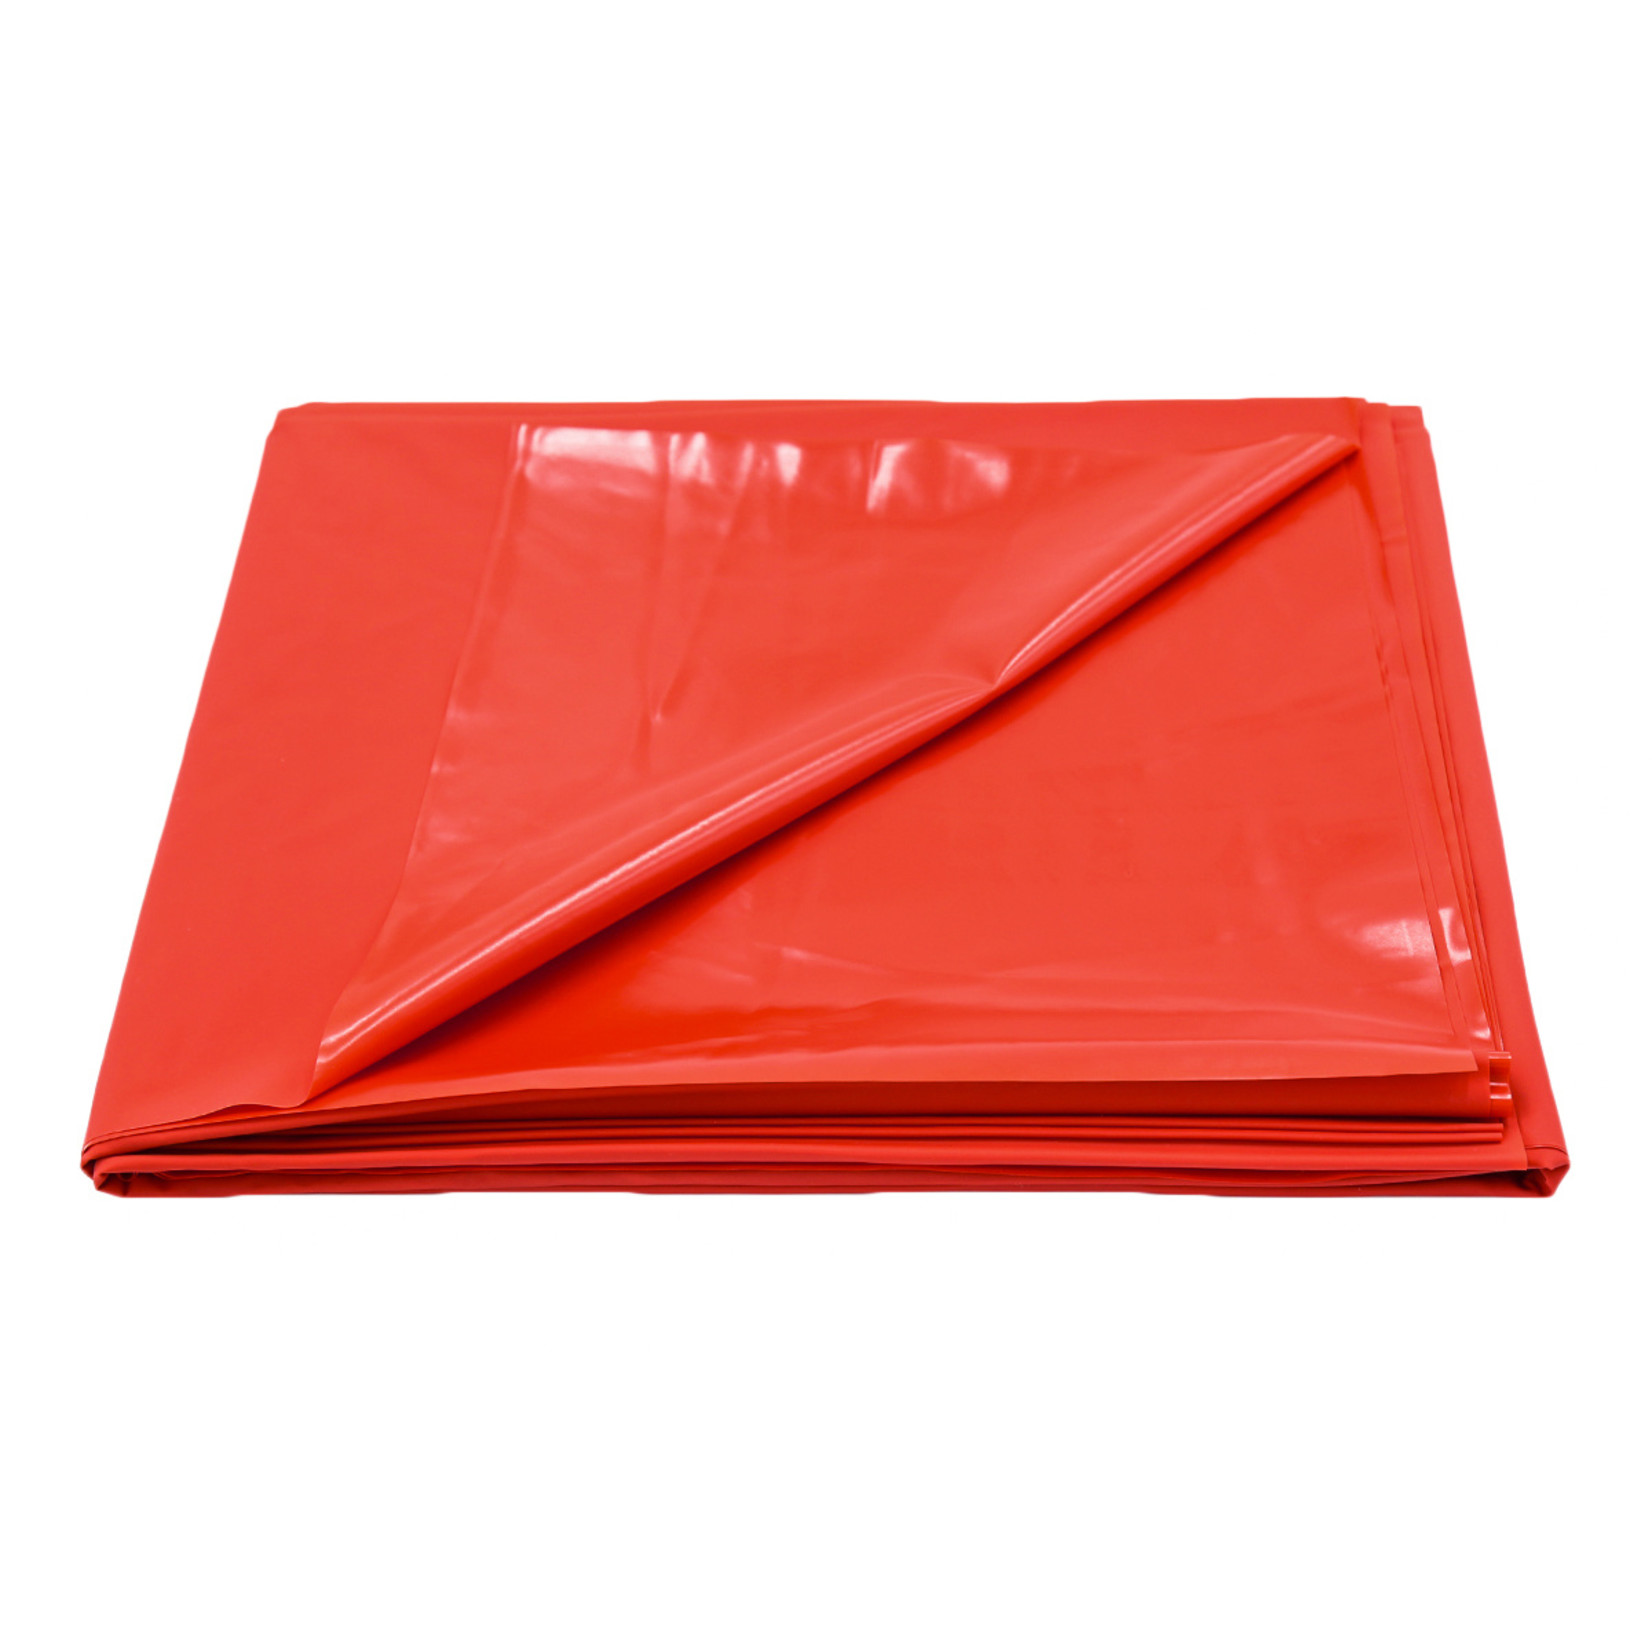 KIOTOS Bed Sheet Cover Red